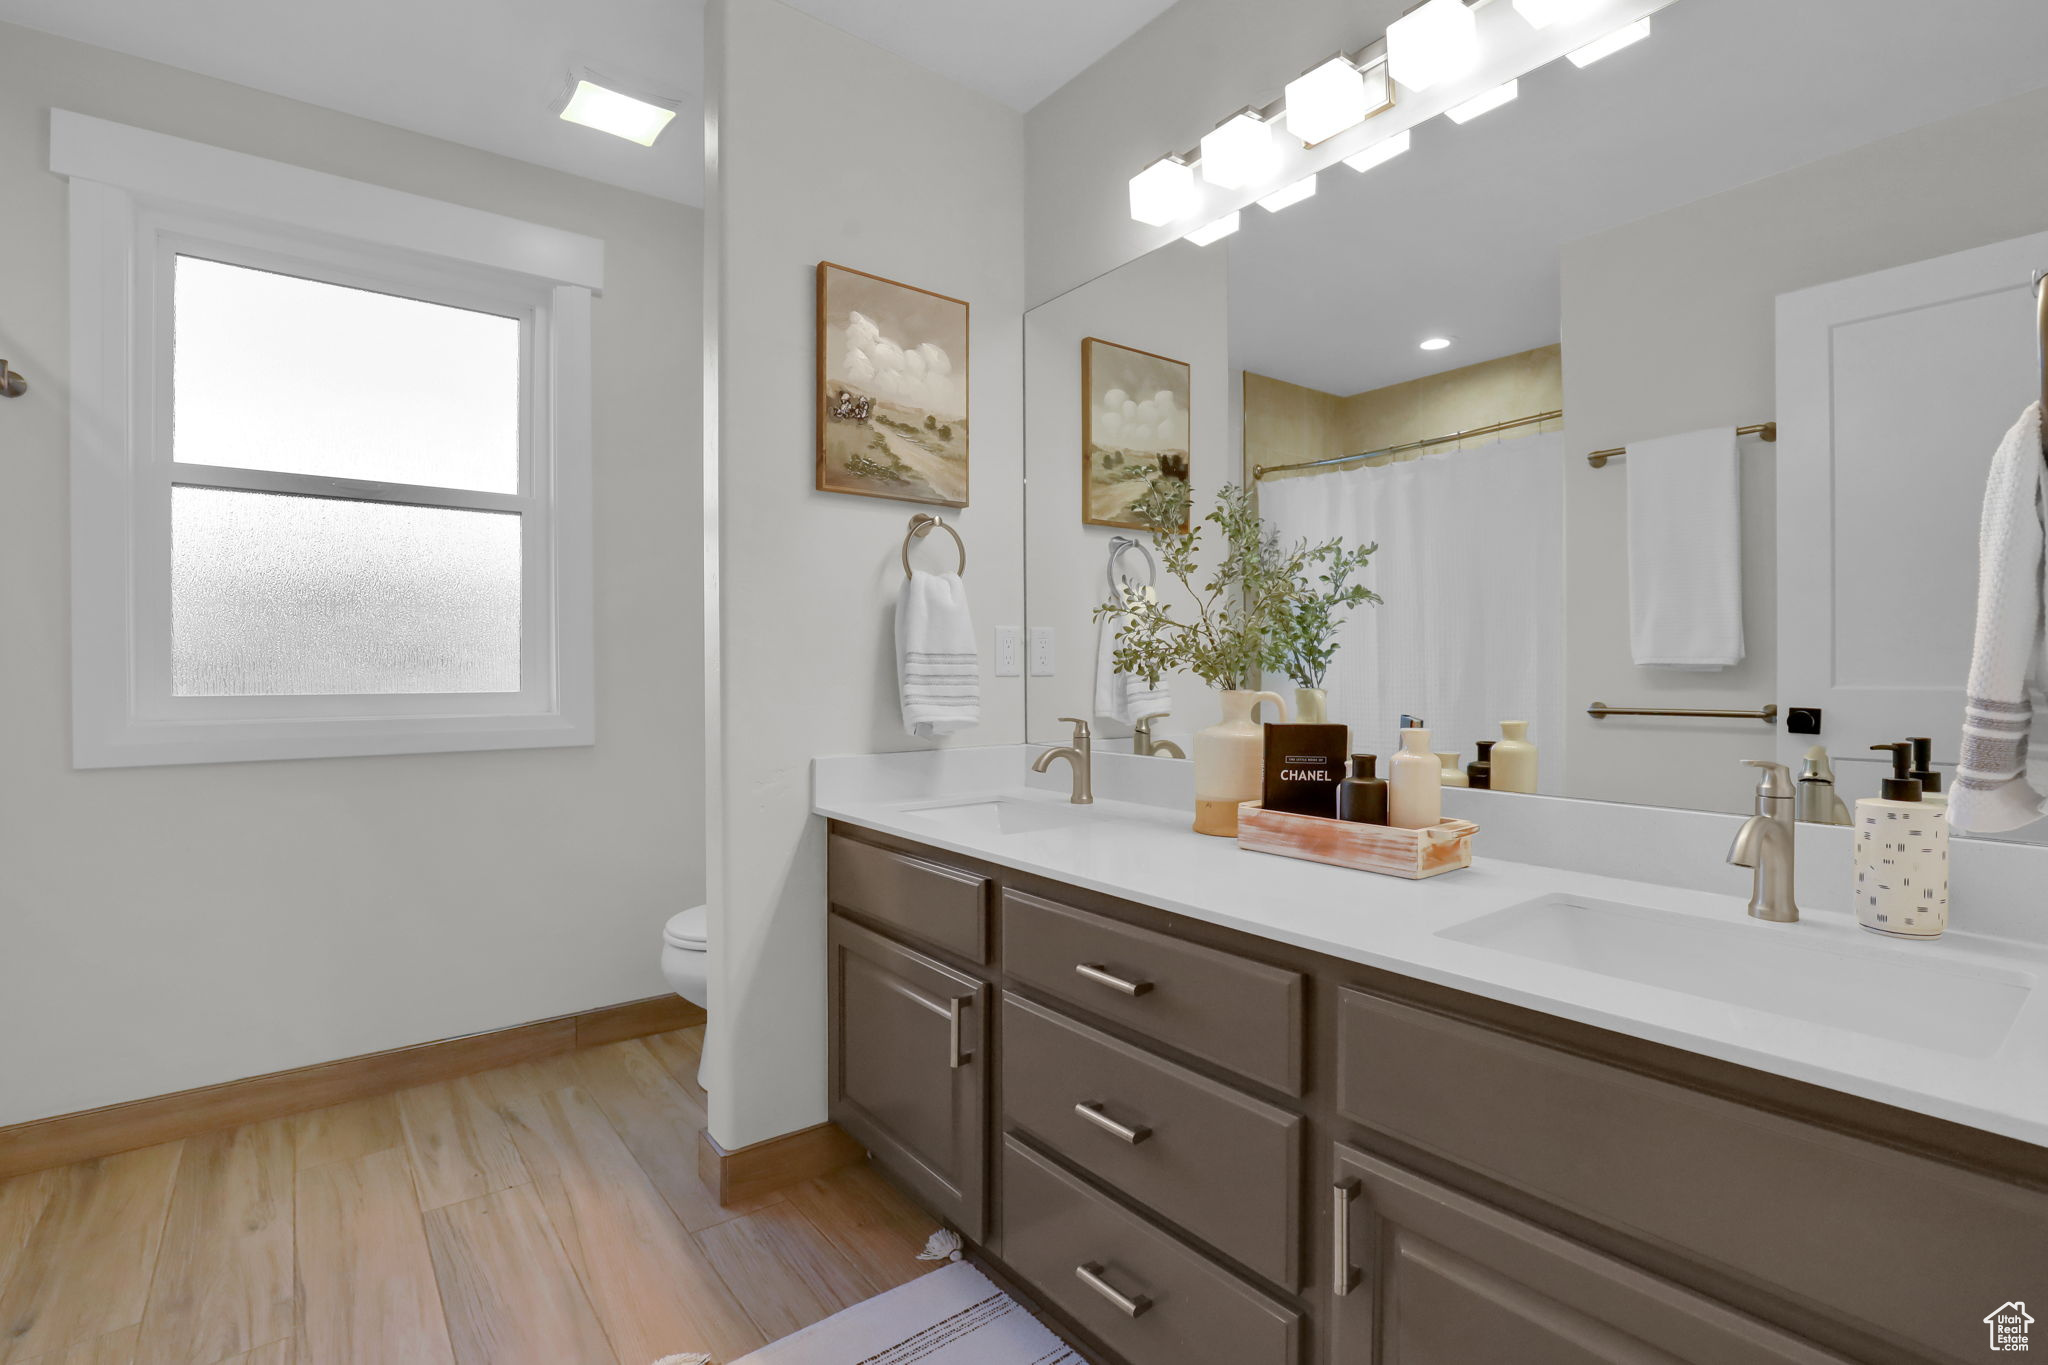 Bathroom with wood-type flooring, plenty of natural light, double sink vanity, and toilet